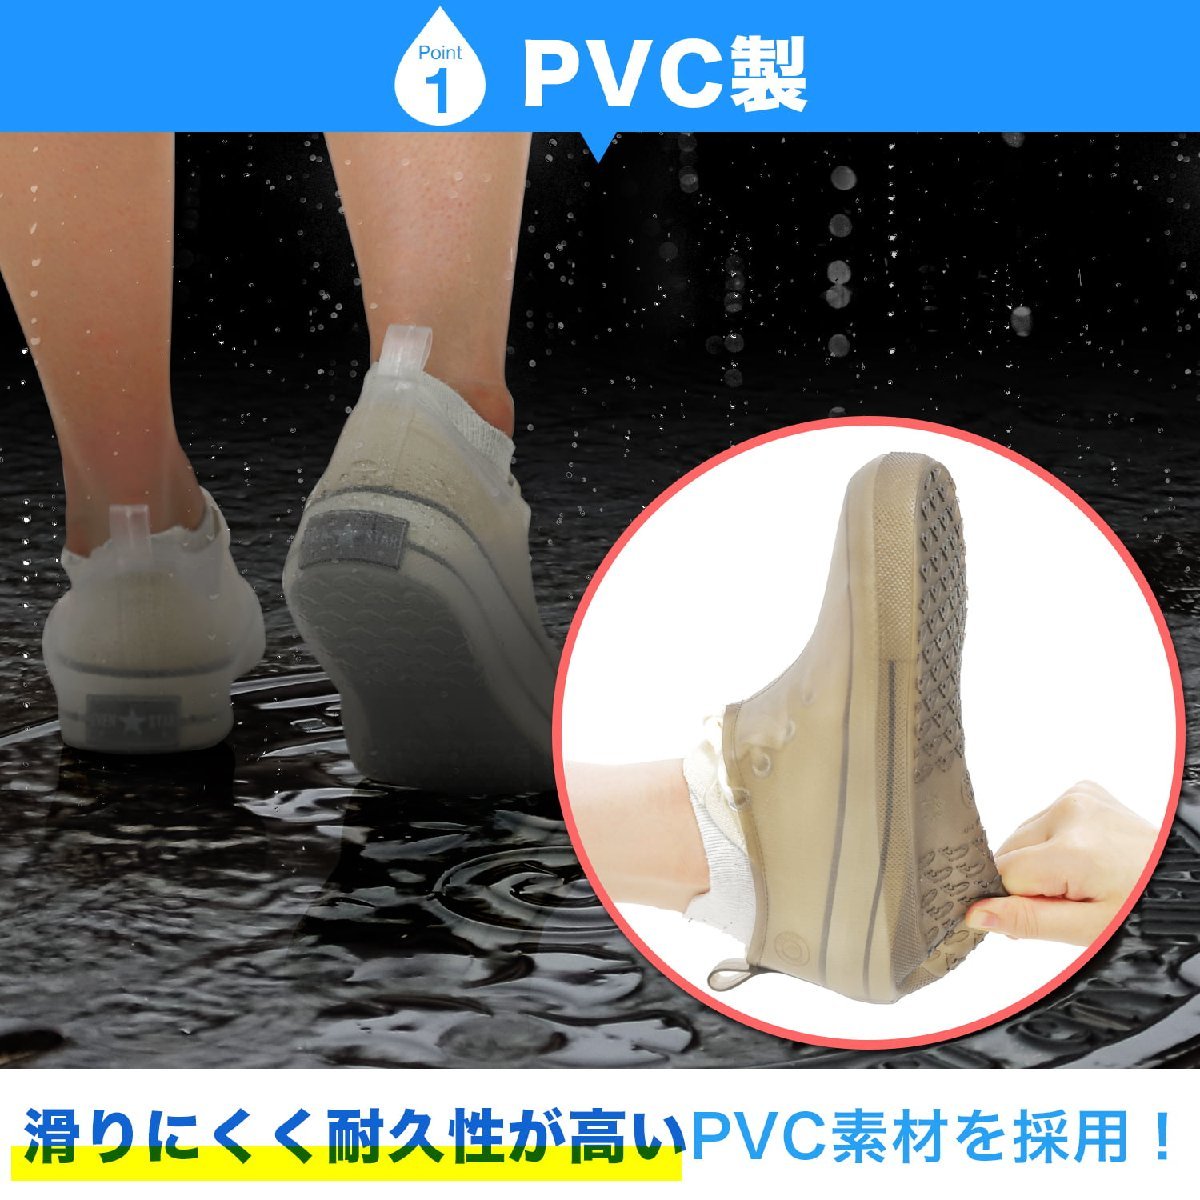  rain shoes cover slipping difficult black 22.5~23.0cm shoe sole ~25cm lady's commuting stylish waterproof PVC